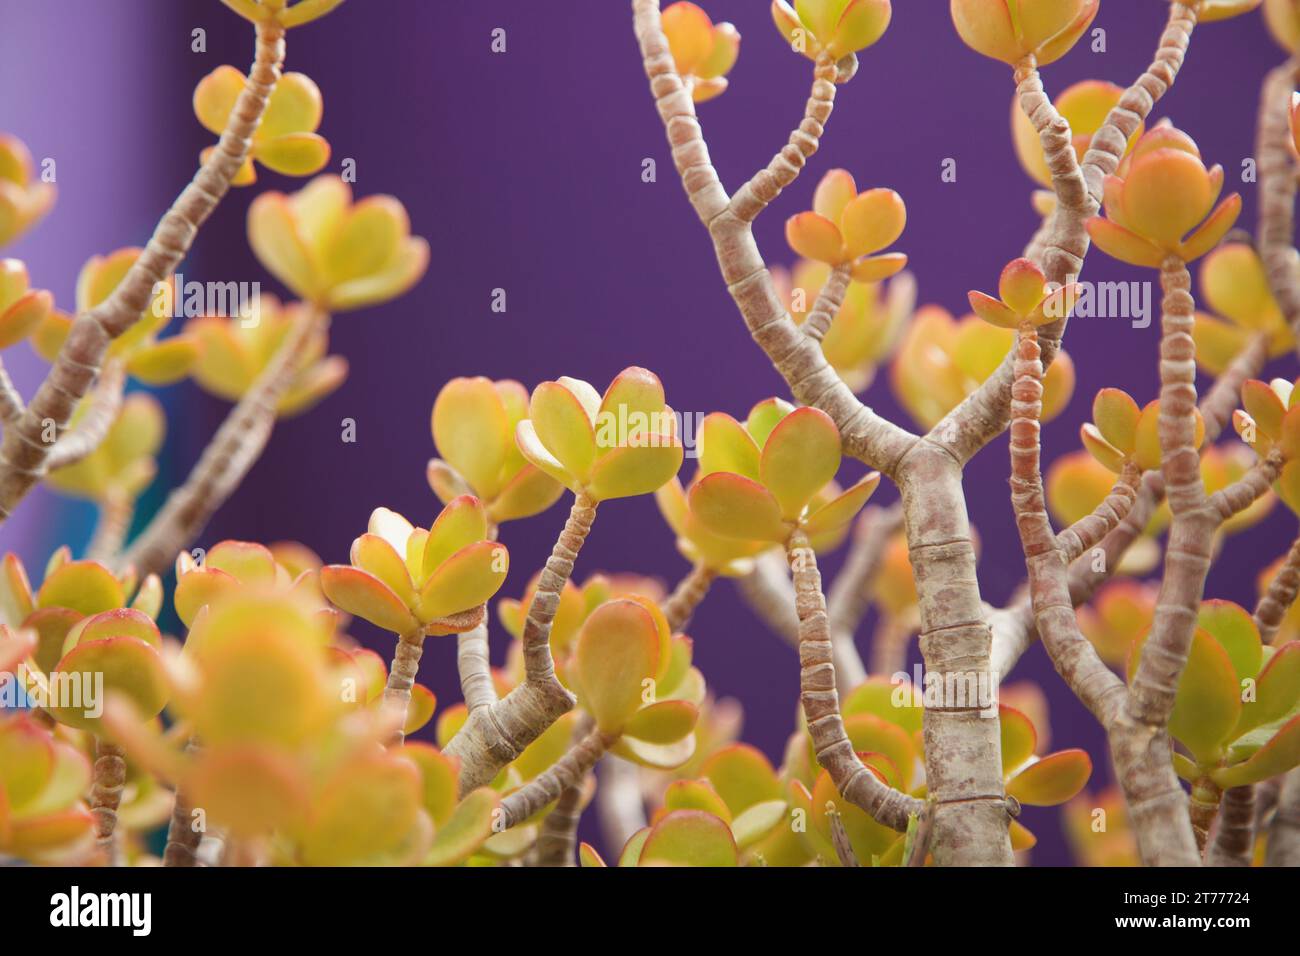 Succulent Plant, Close-up view Stock Photo